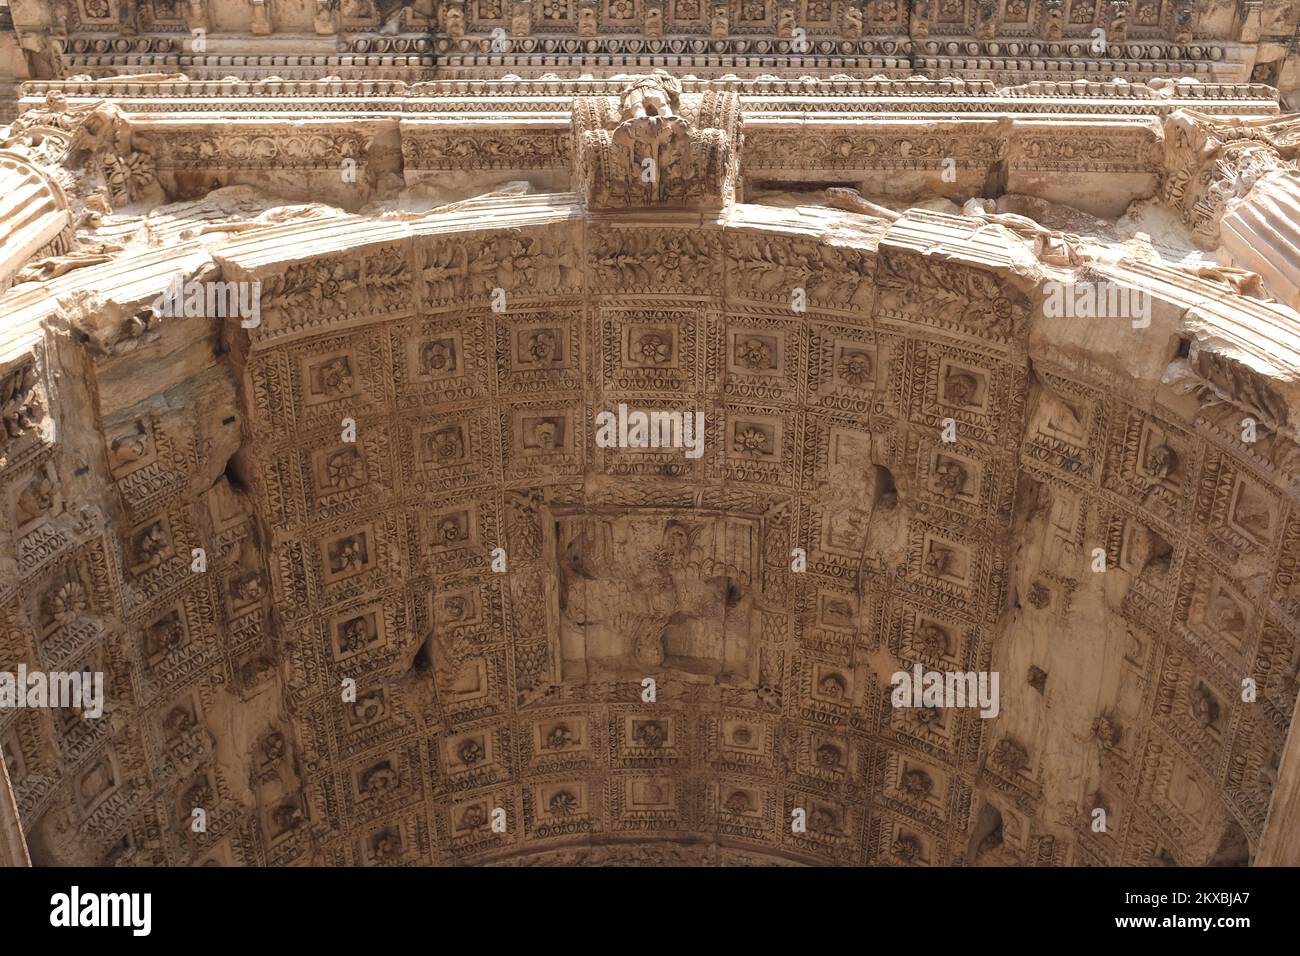 Rome, Italy - close-up under Arch of Titus. Ruins along Via Sacra in Roman Forum. Ancient arch celebrating fall of Jerusalem. Jewish diaspora symbol. Stock Photo